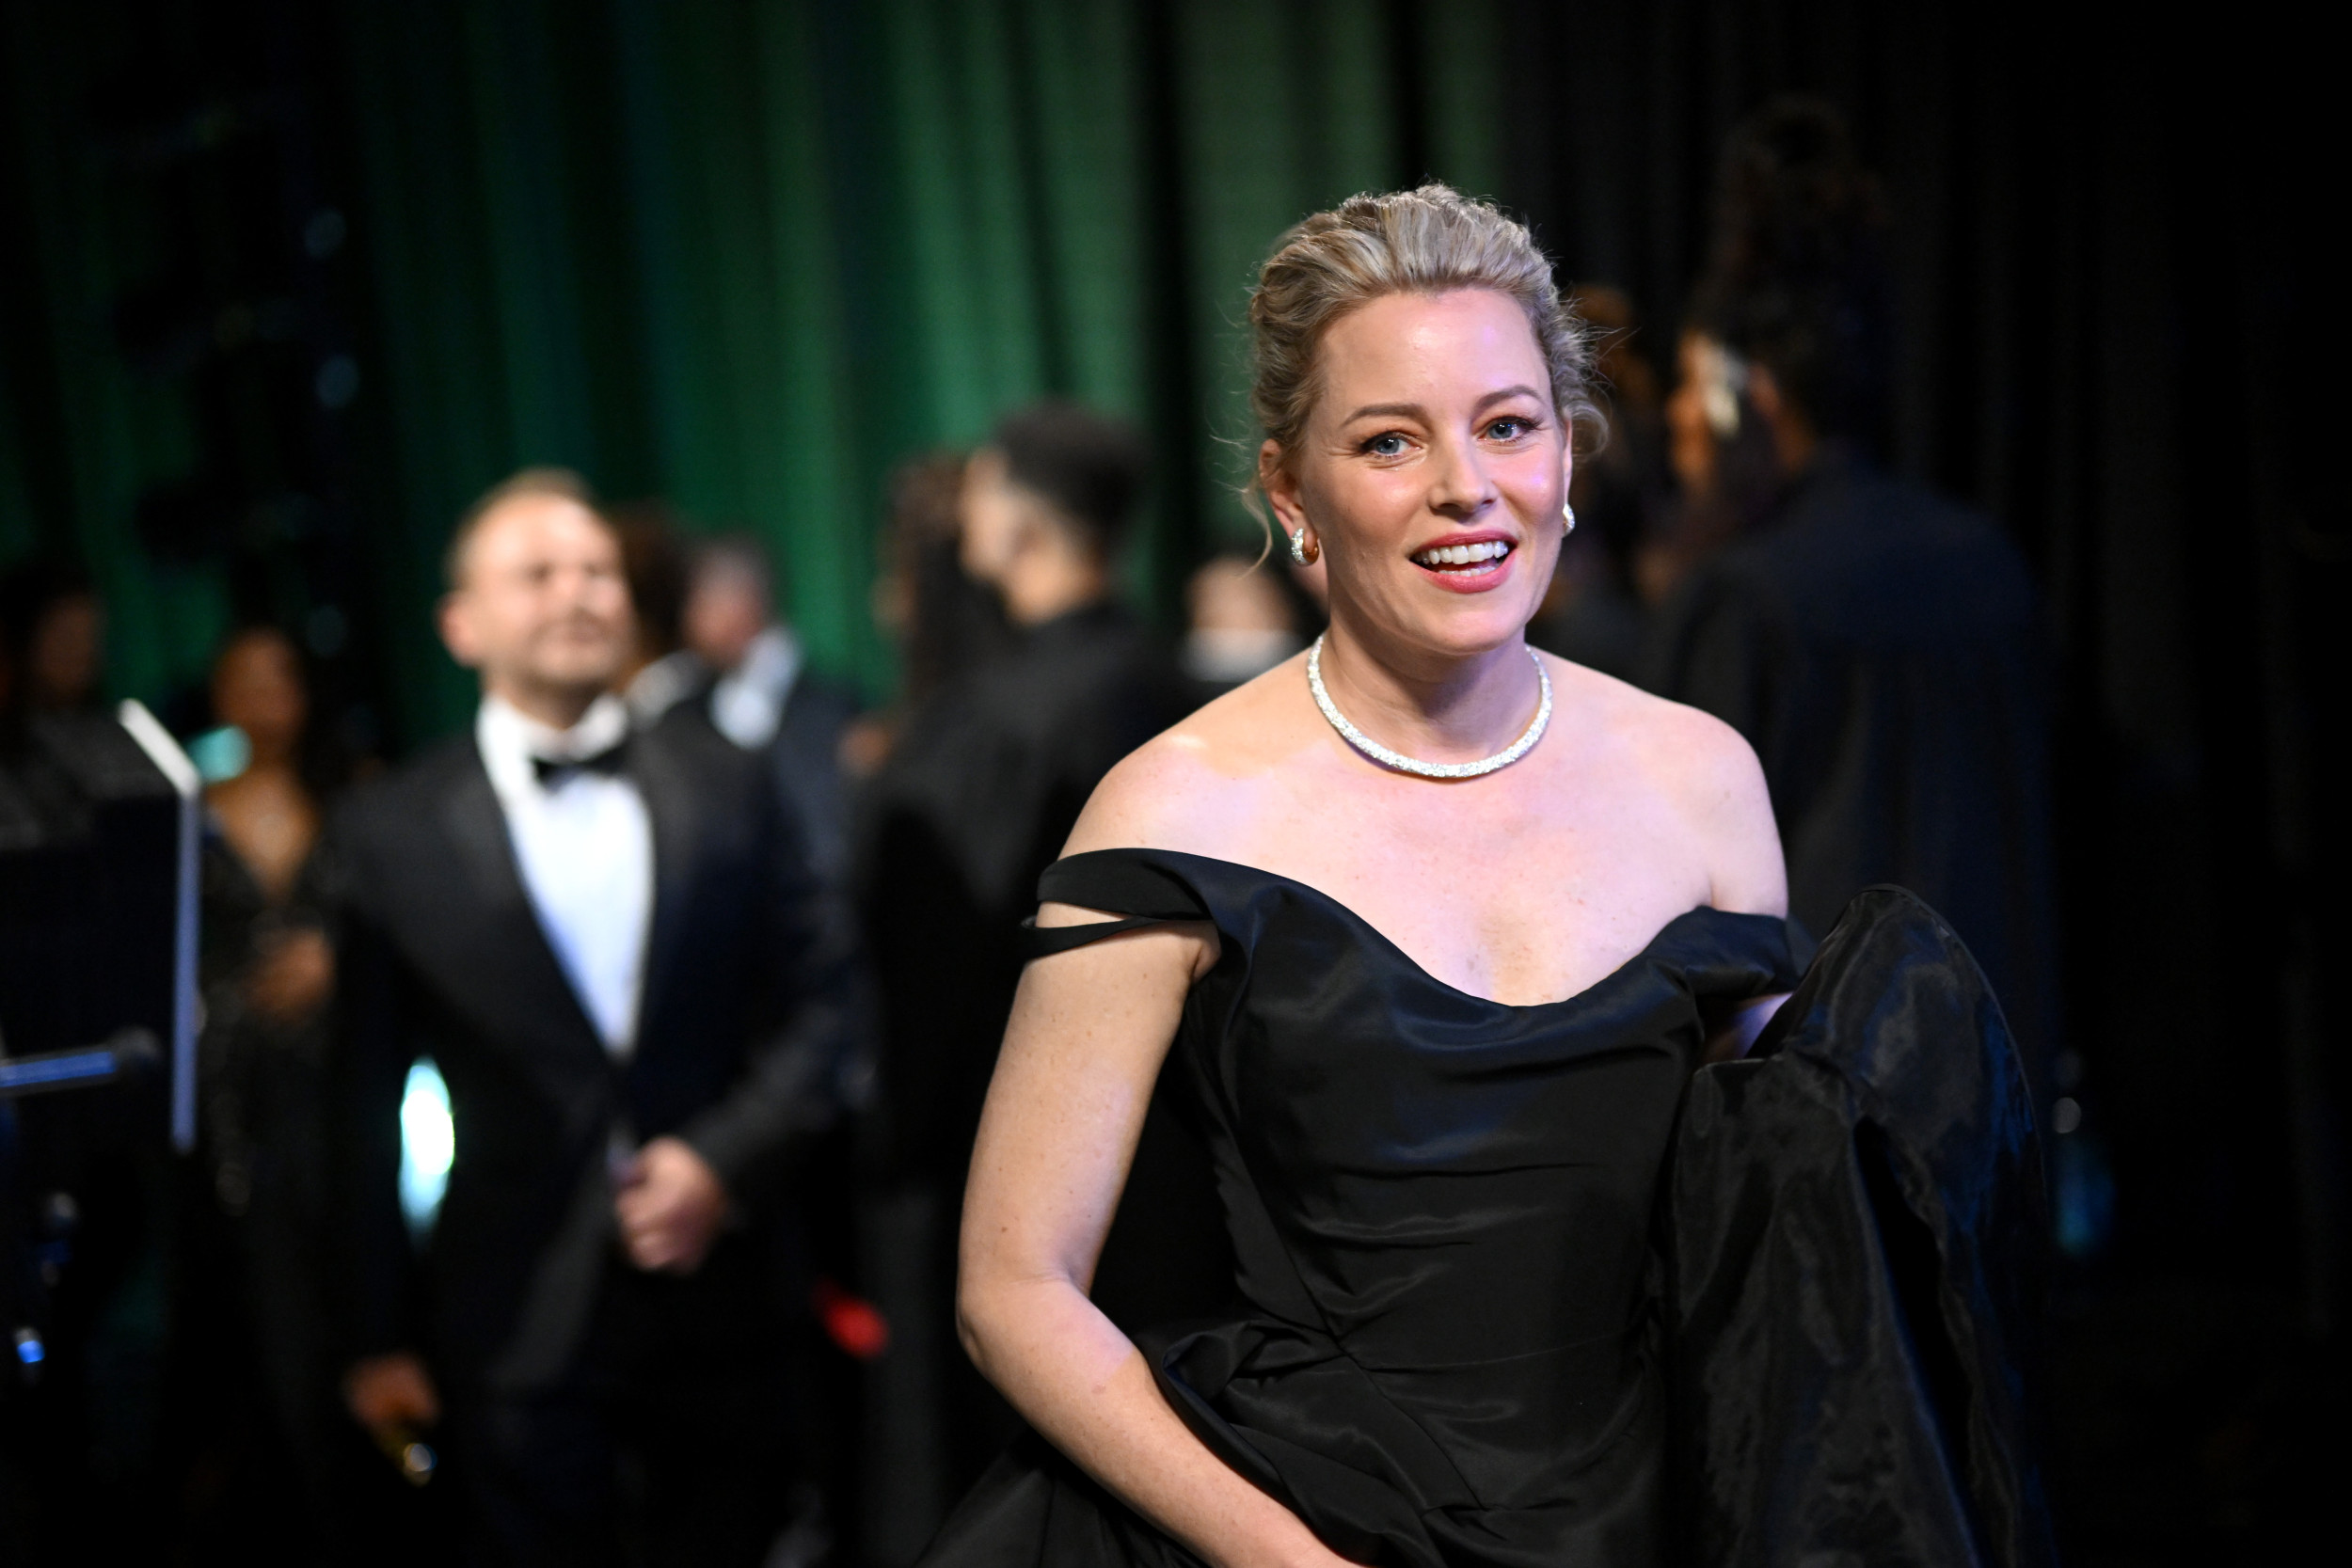 Elizabeth Banks' Voice at Oscars Sparks Concern—'She Sounds Outrageous'